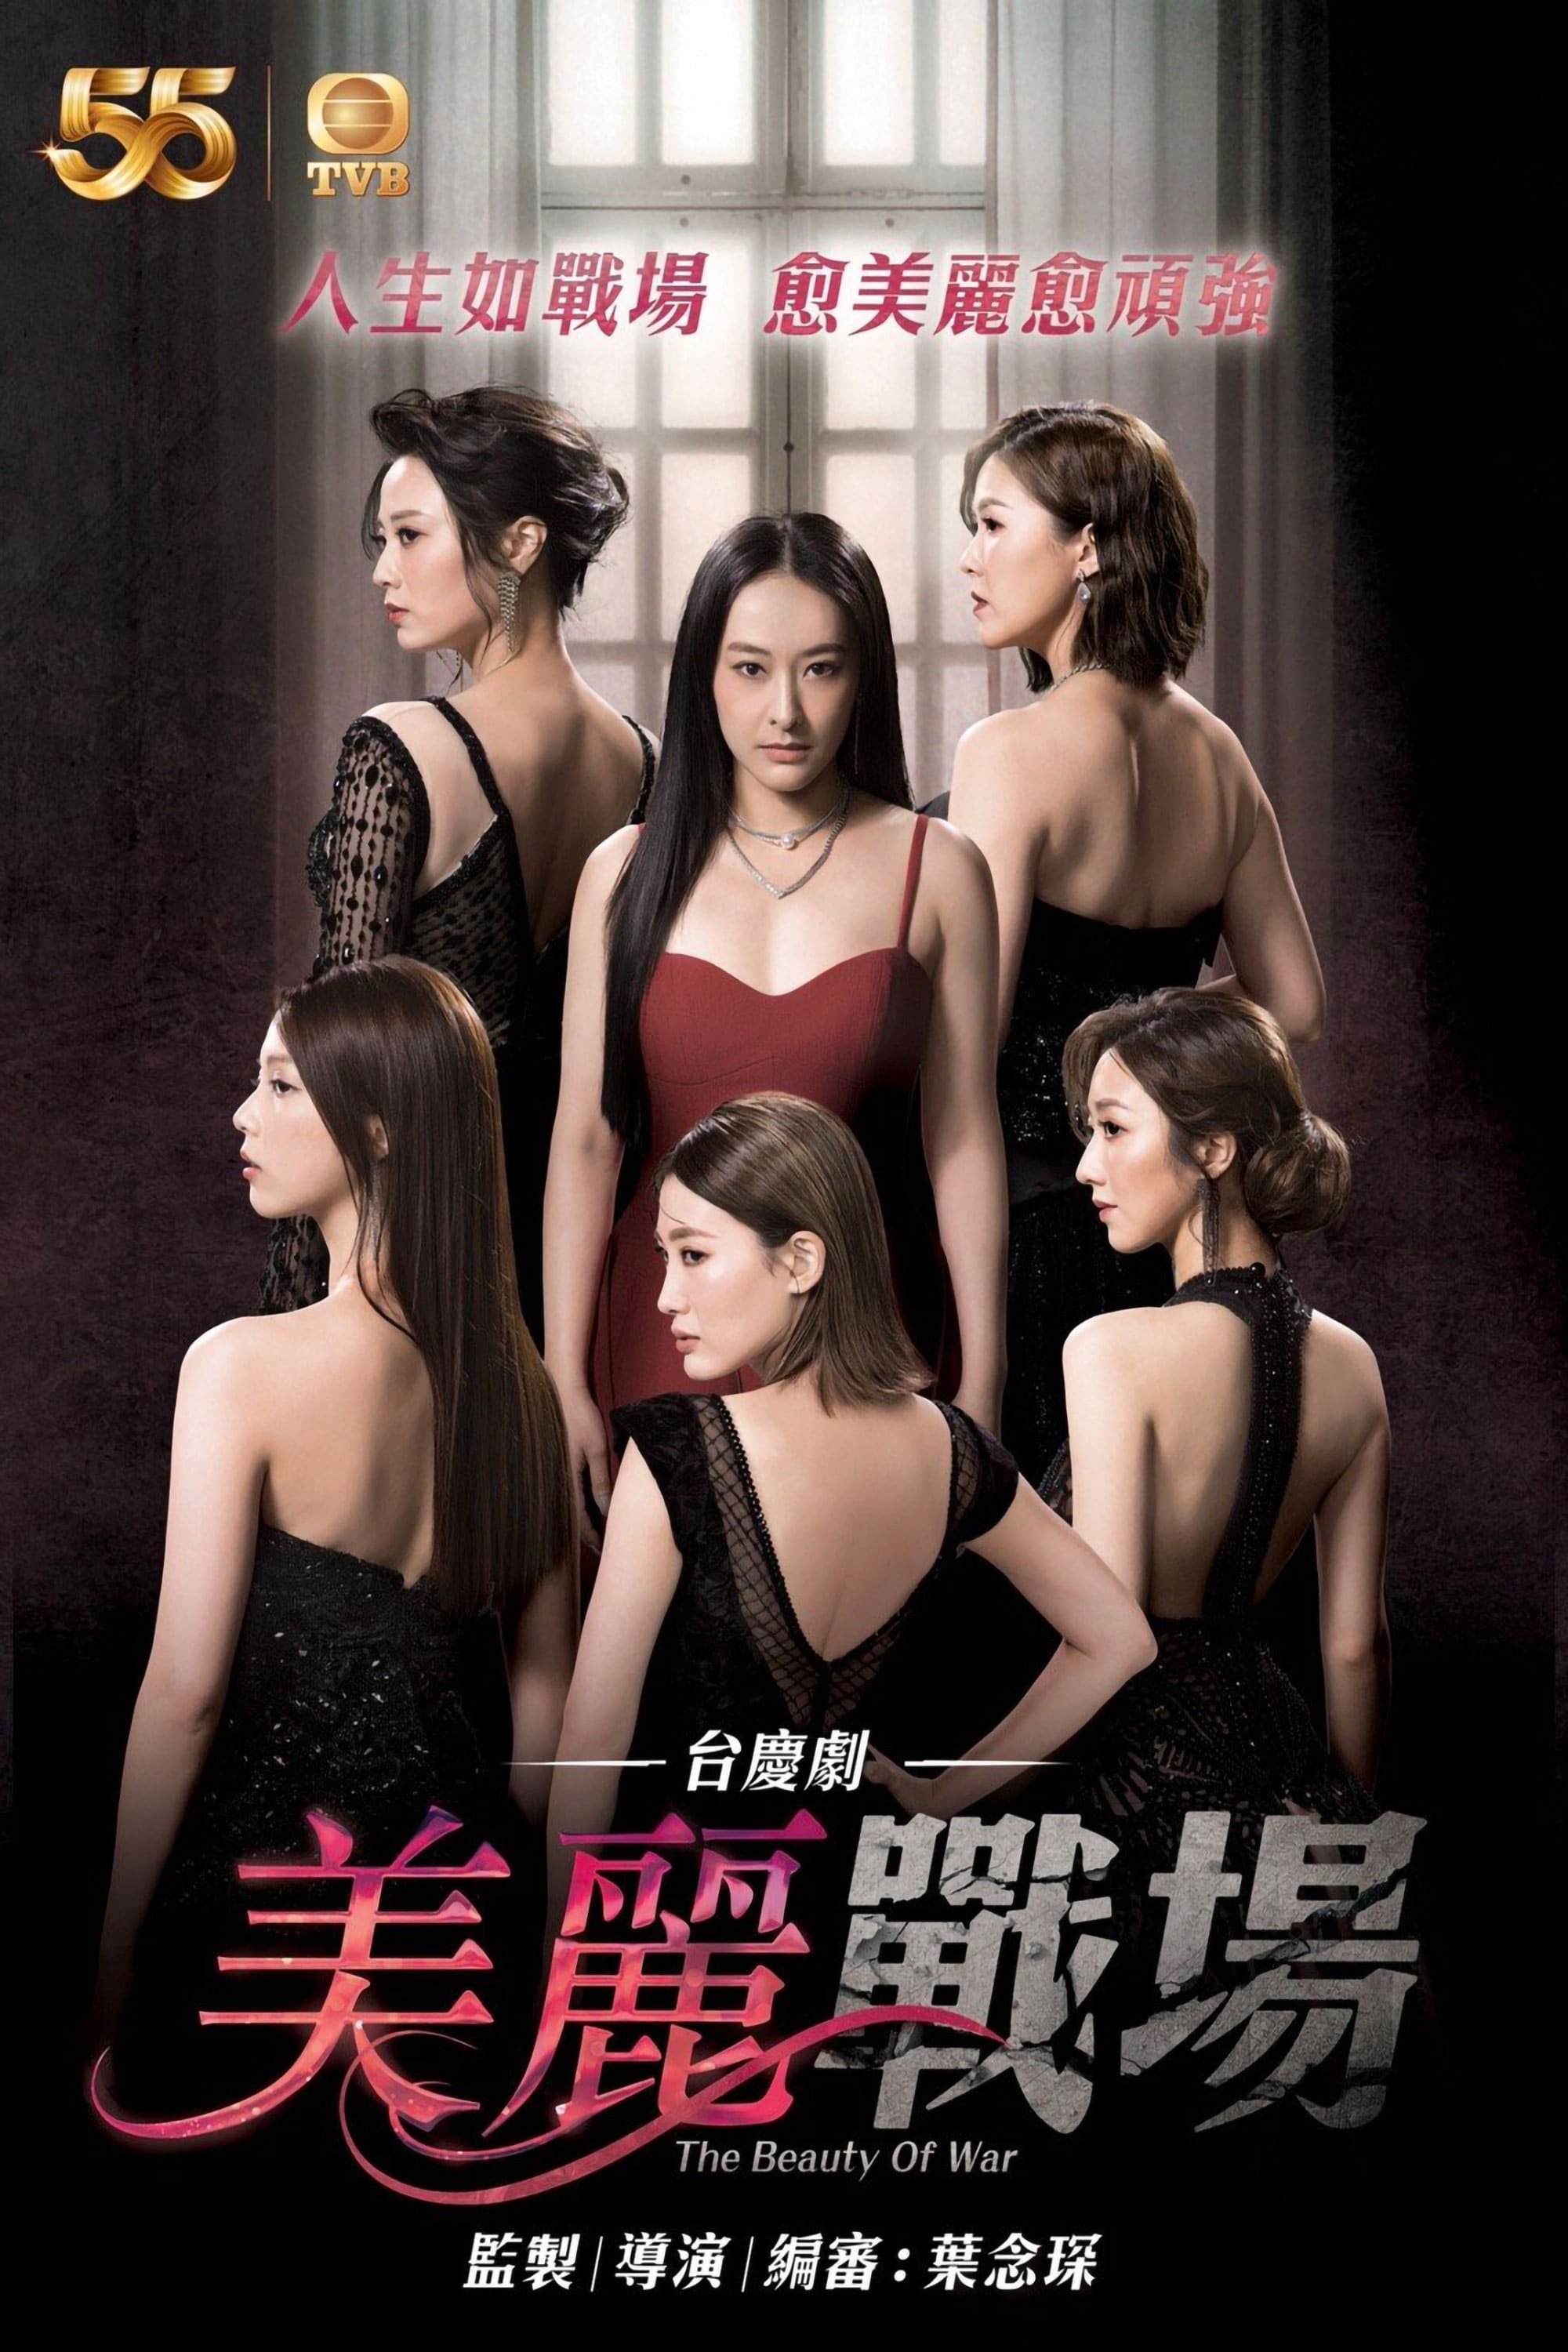 TV ratings for The War Of Beauties (美麗戰場) in Nueva Zelanda. TVB Jade TV series